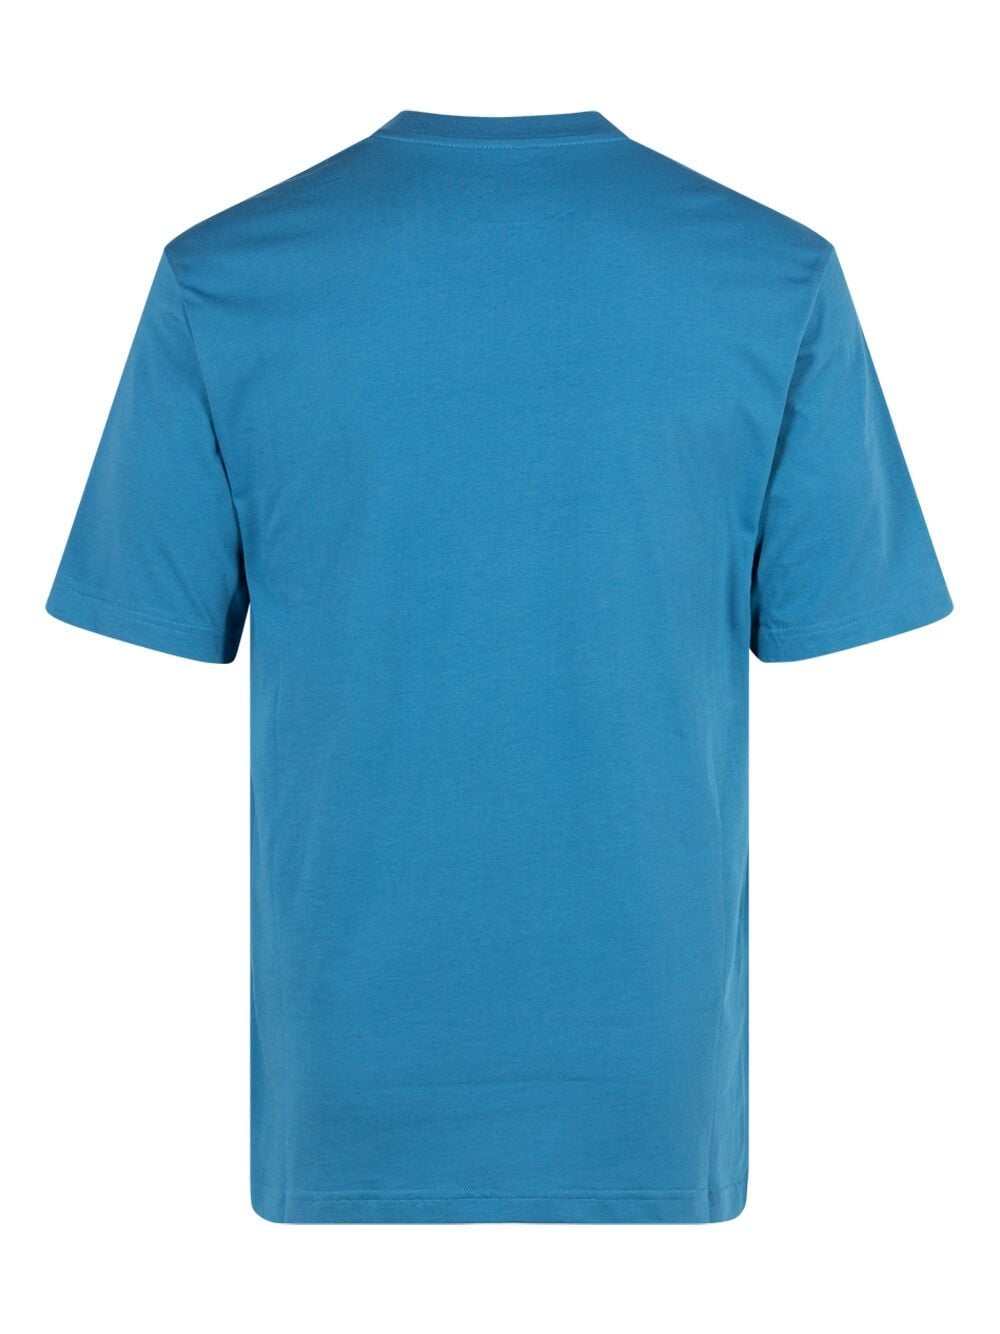 Palace Ace T-Shirt - Blauw